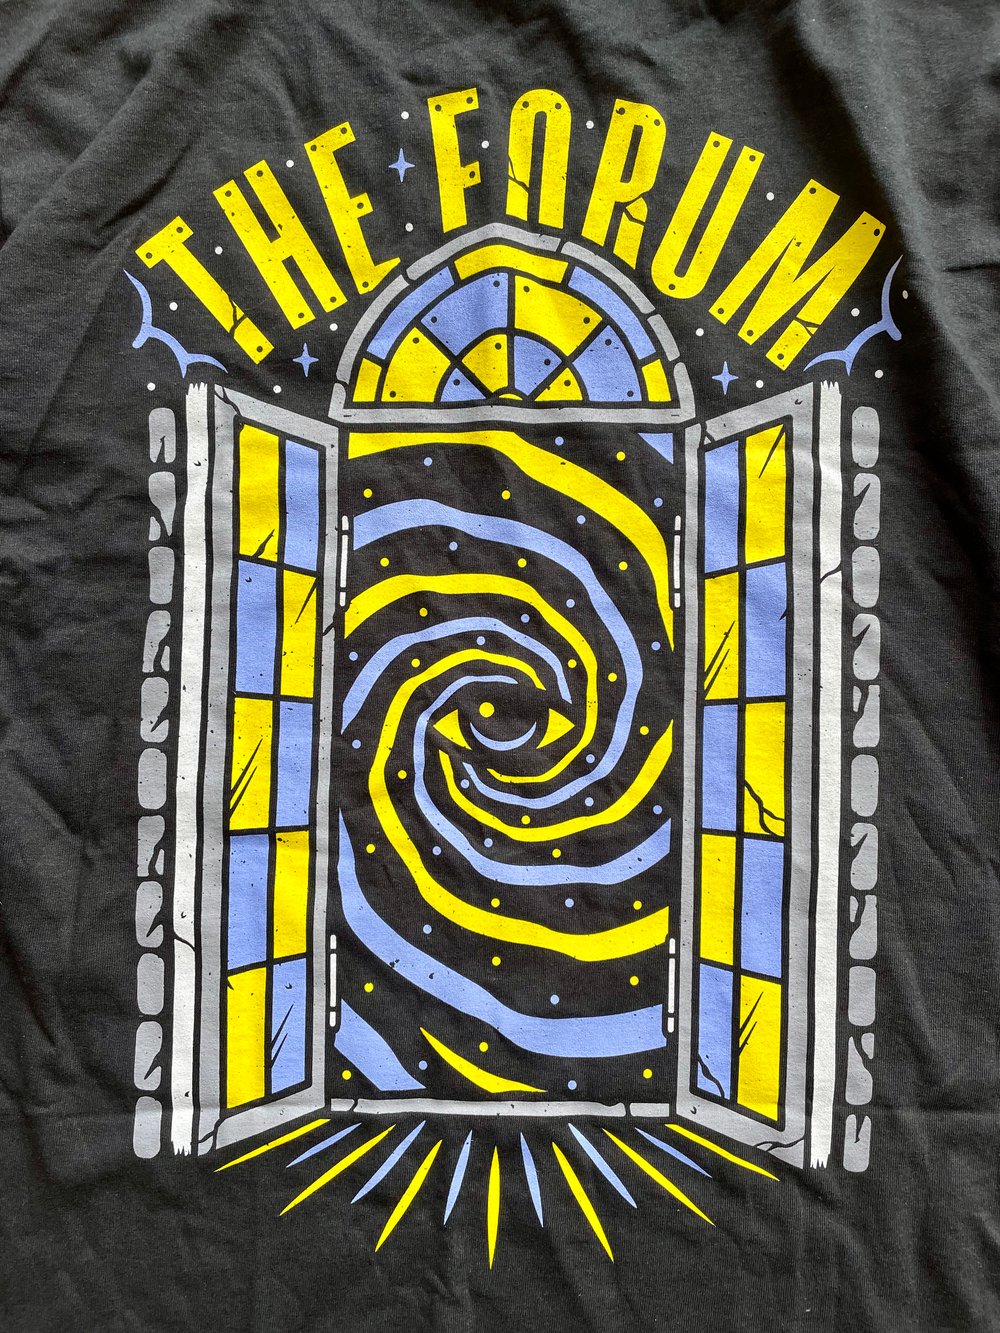 The Forum is Open! 2021 Shirt (Long Sleeve)